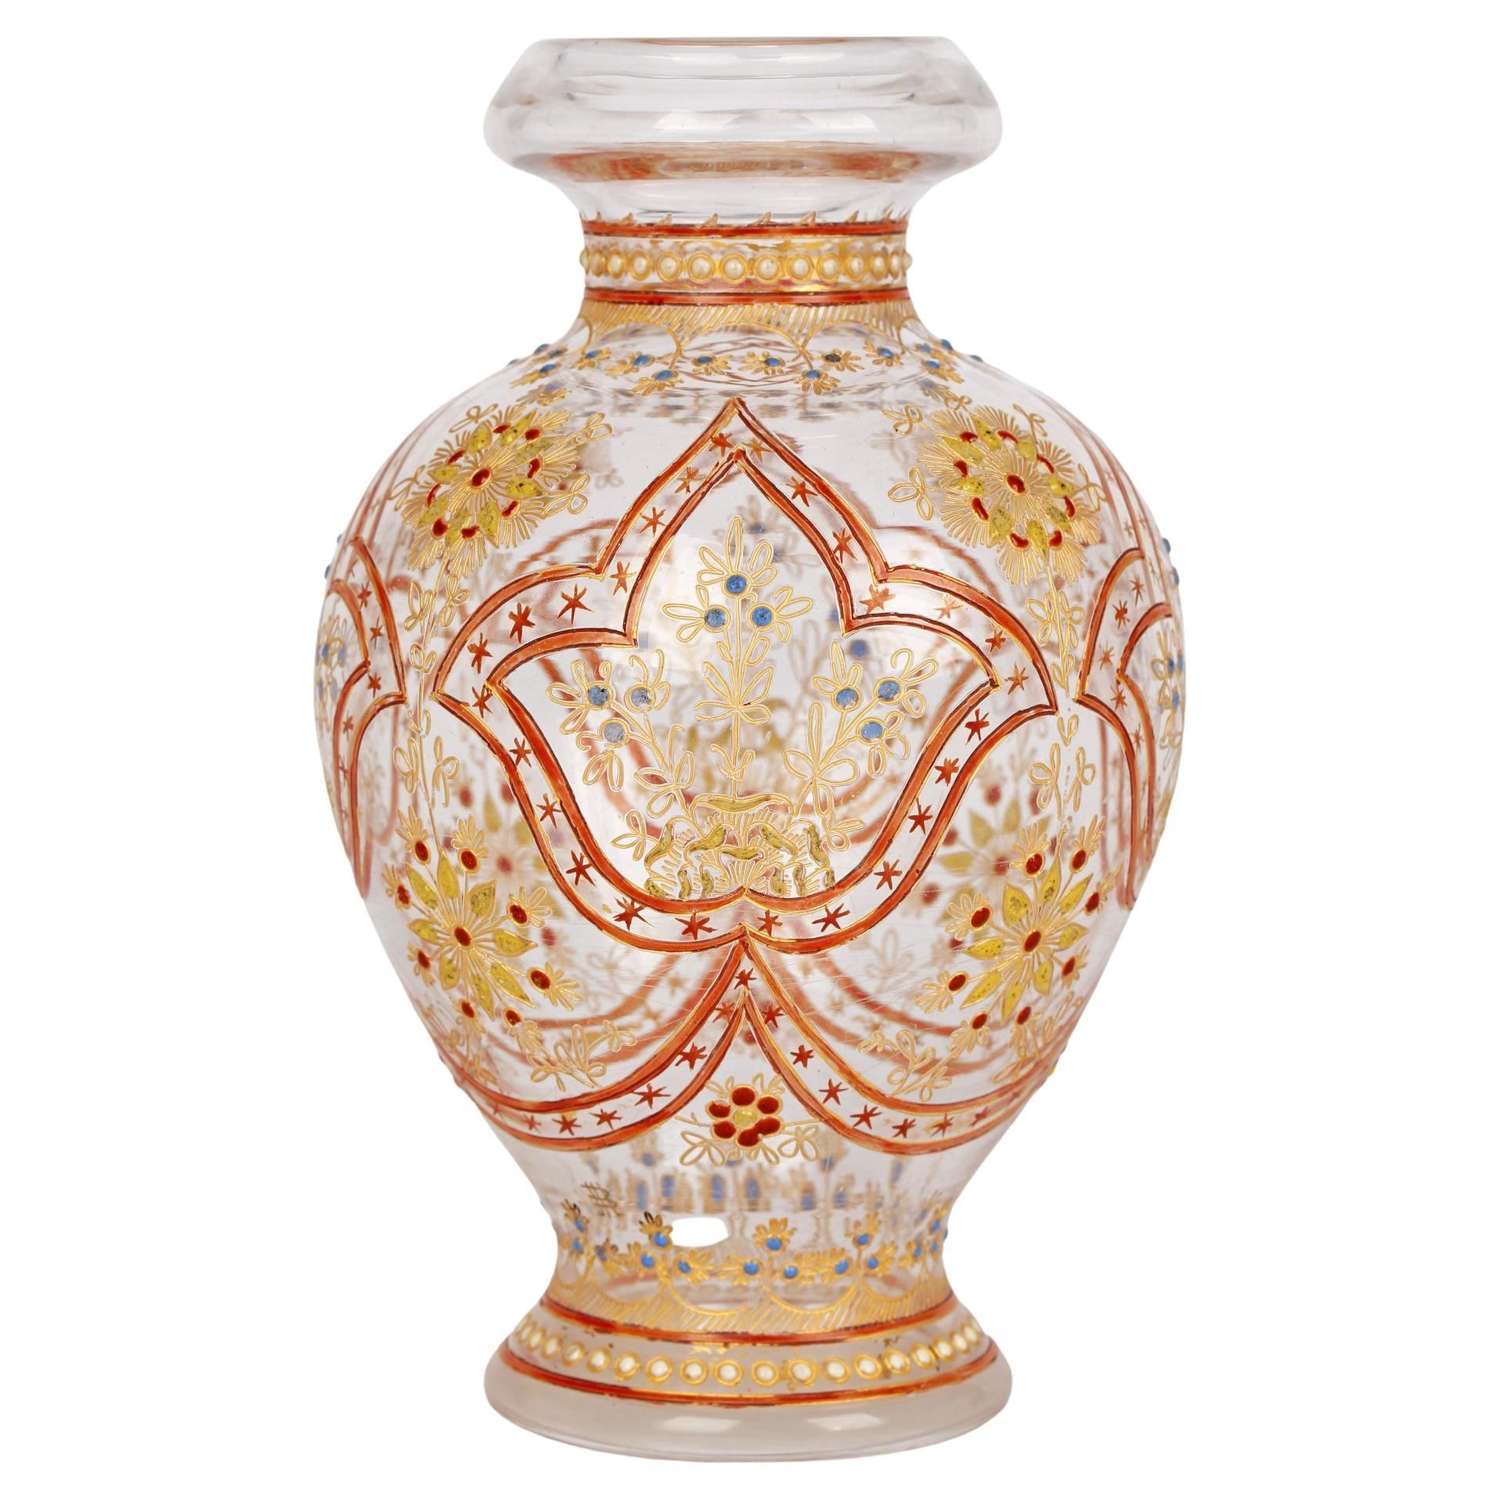 J & L Lobmeyr Viennese Enamelled Persian-Style Glass Vase